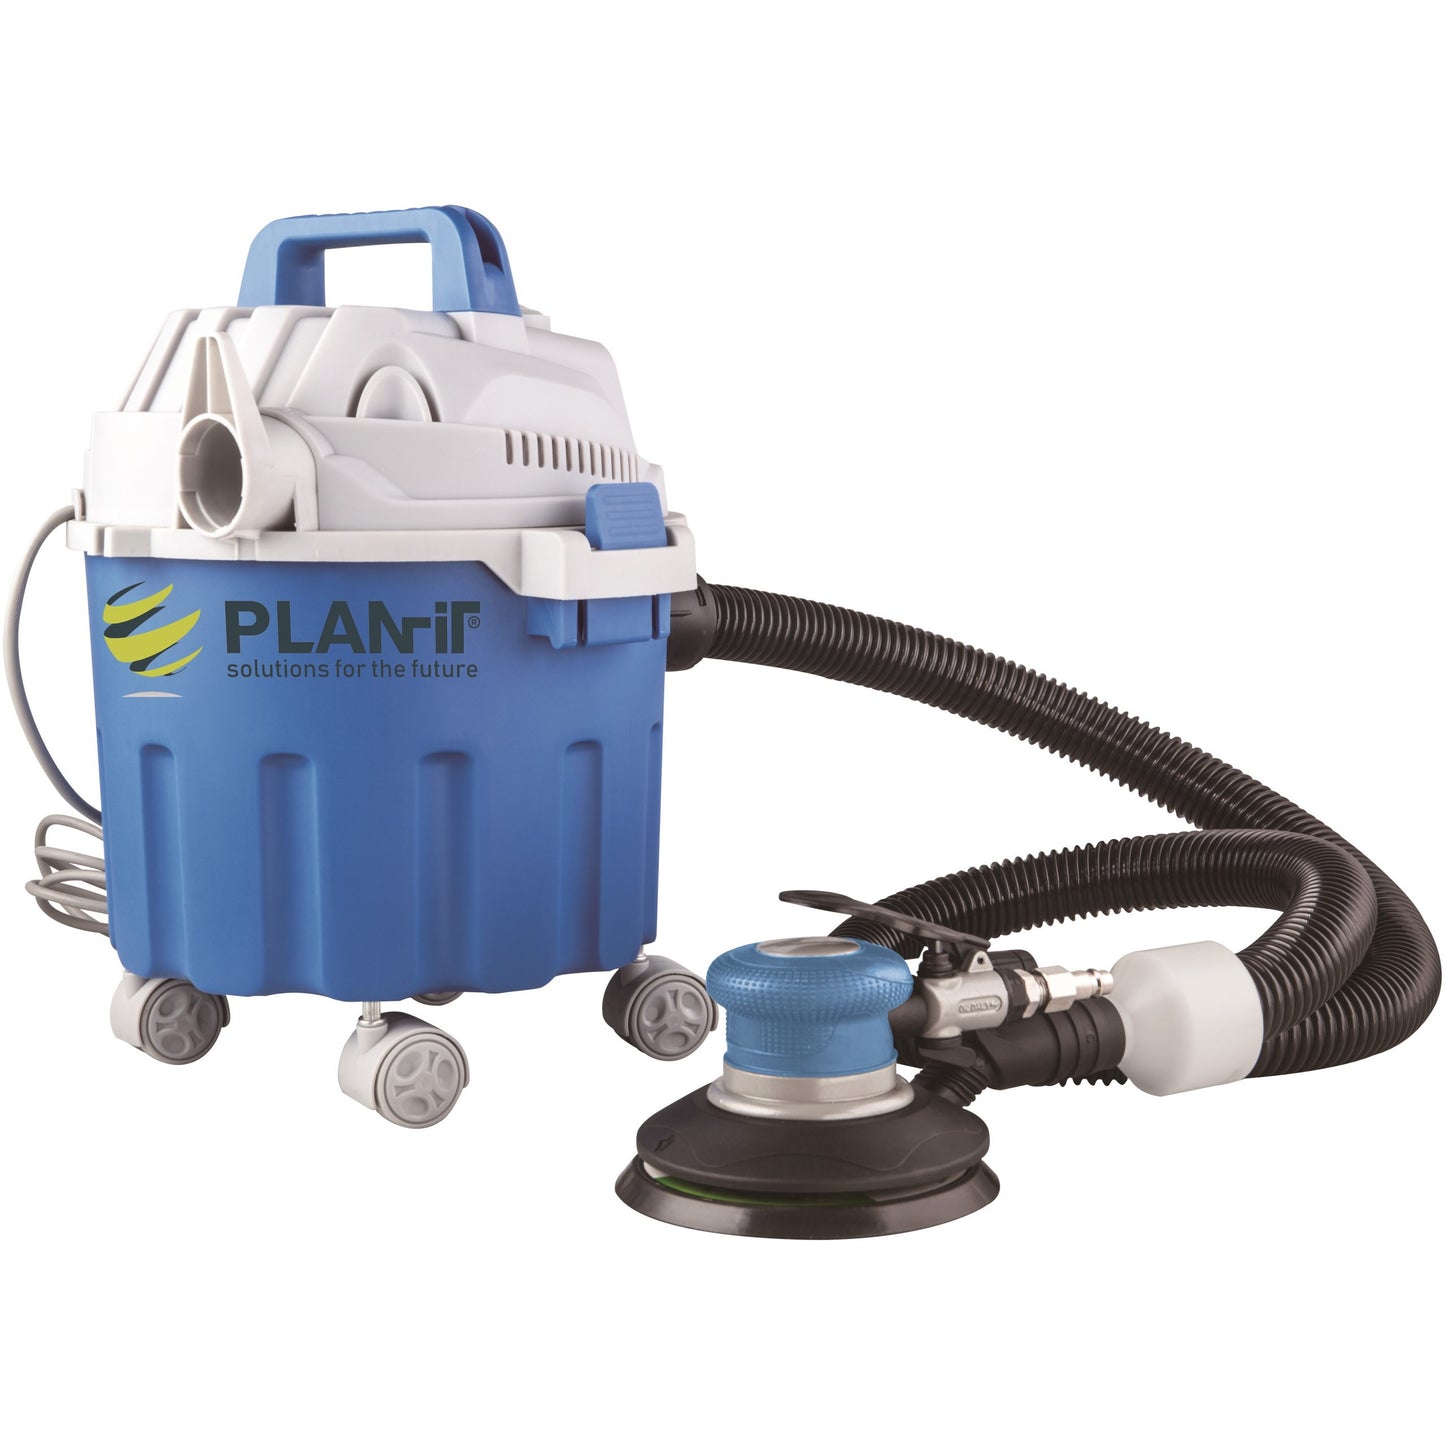 PLANIT Air Sander Vacuum kit